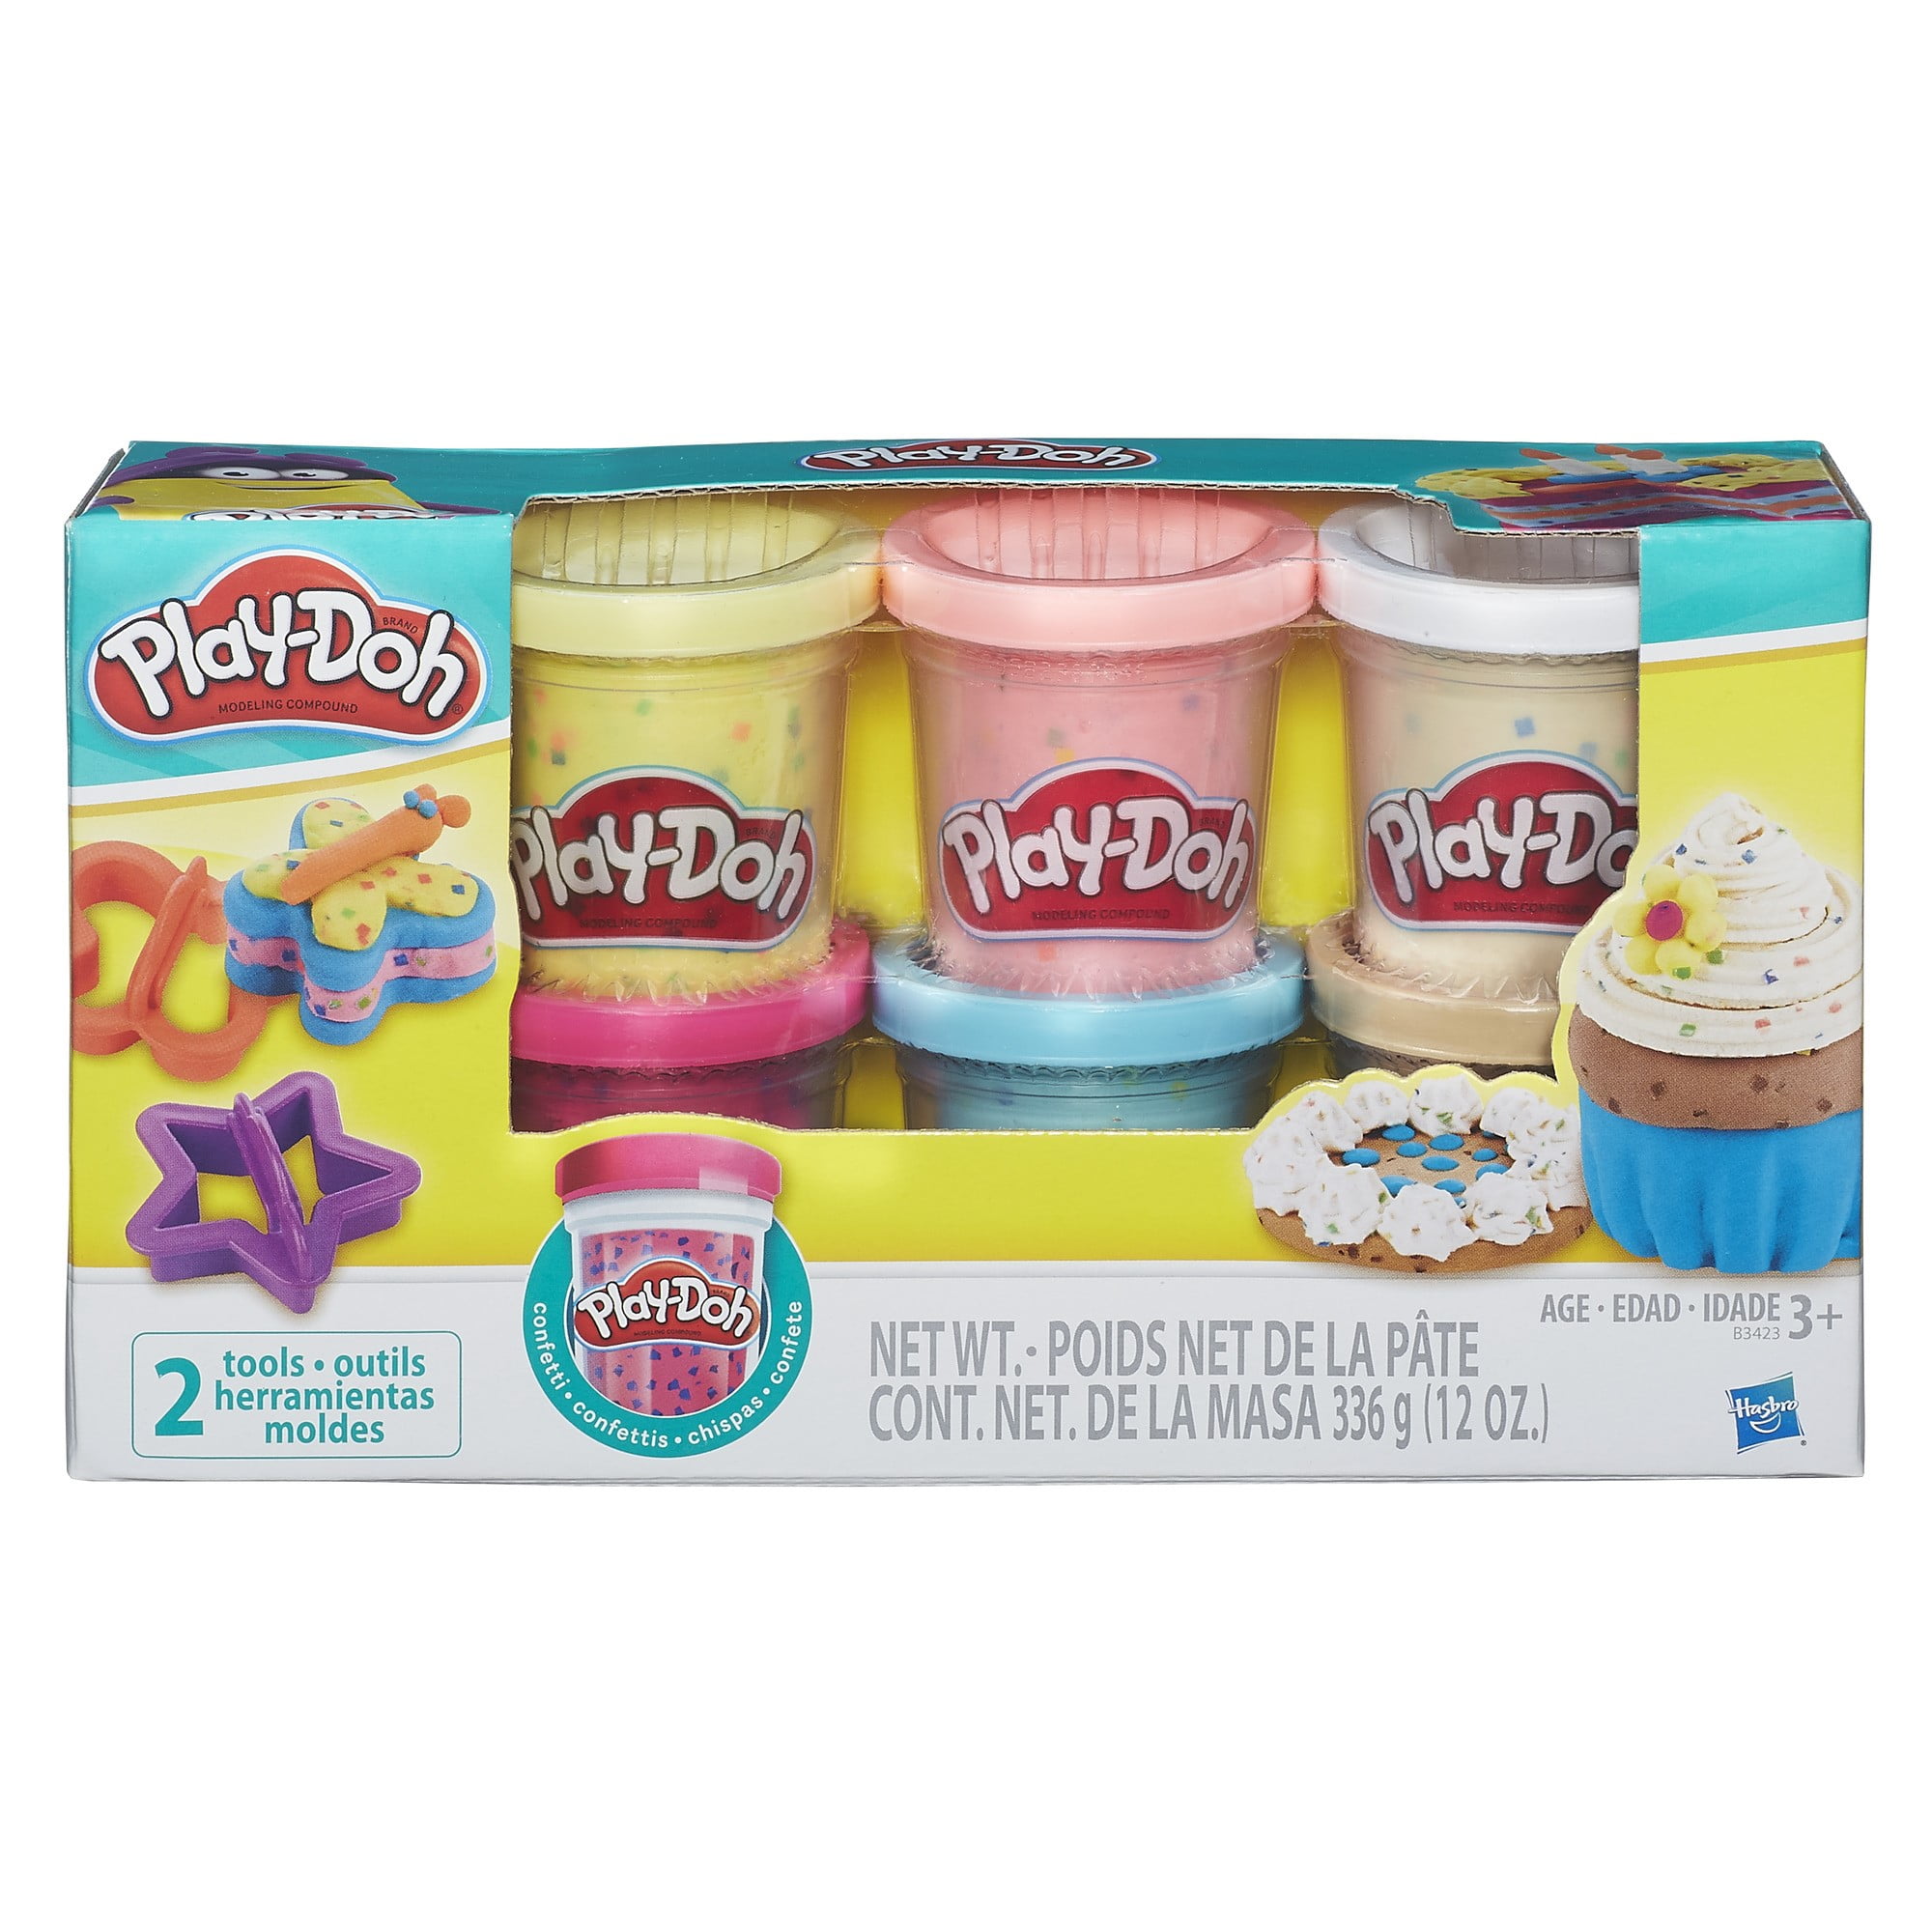 show original title Details about   Play-doh confetti Compound Collection 6 x 56g pots 2 X Model NEW 